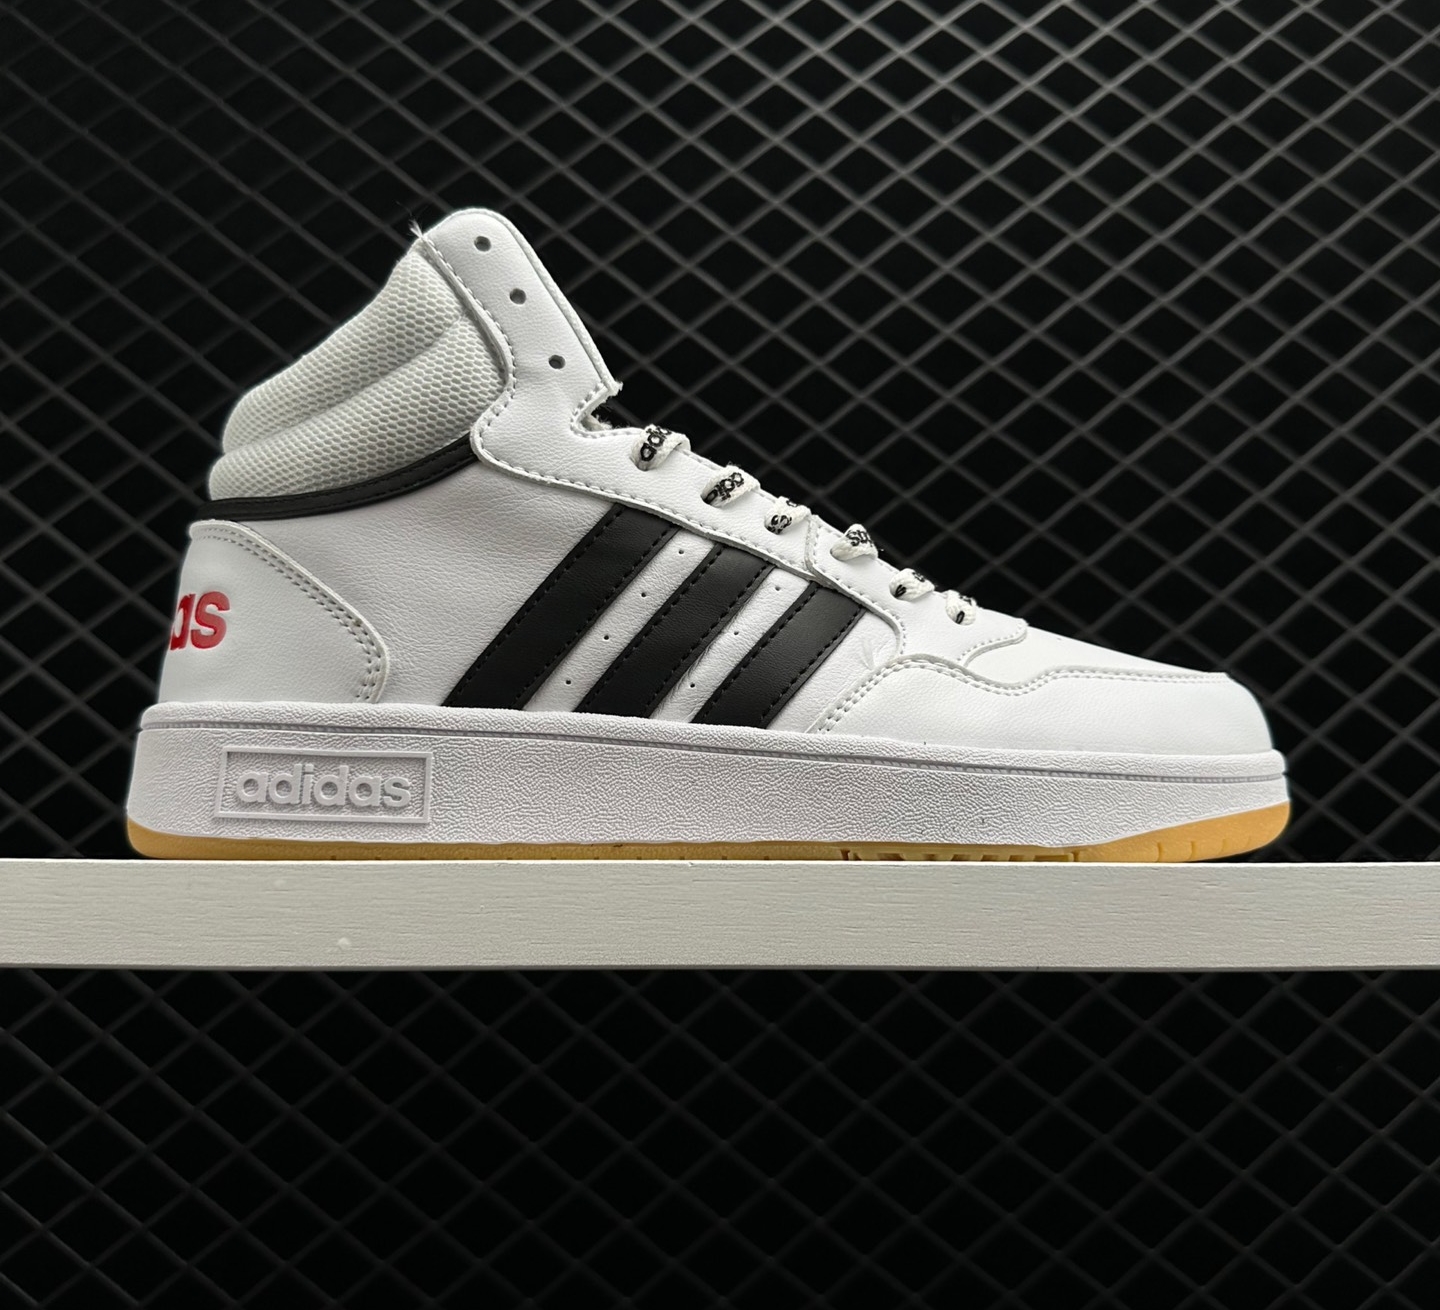 Adidas Hoops 3.0 Mid Sneakers White Navy Gum - Fresh & Modern Style